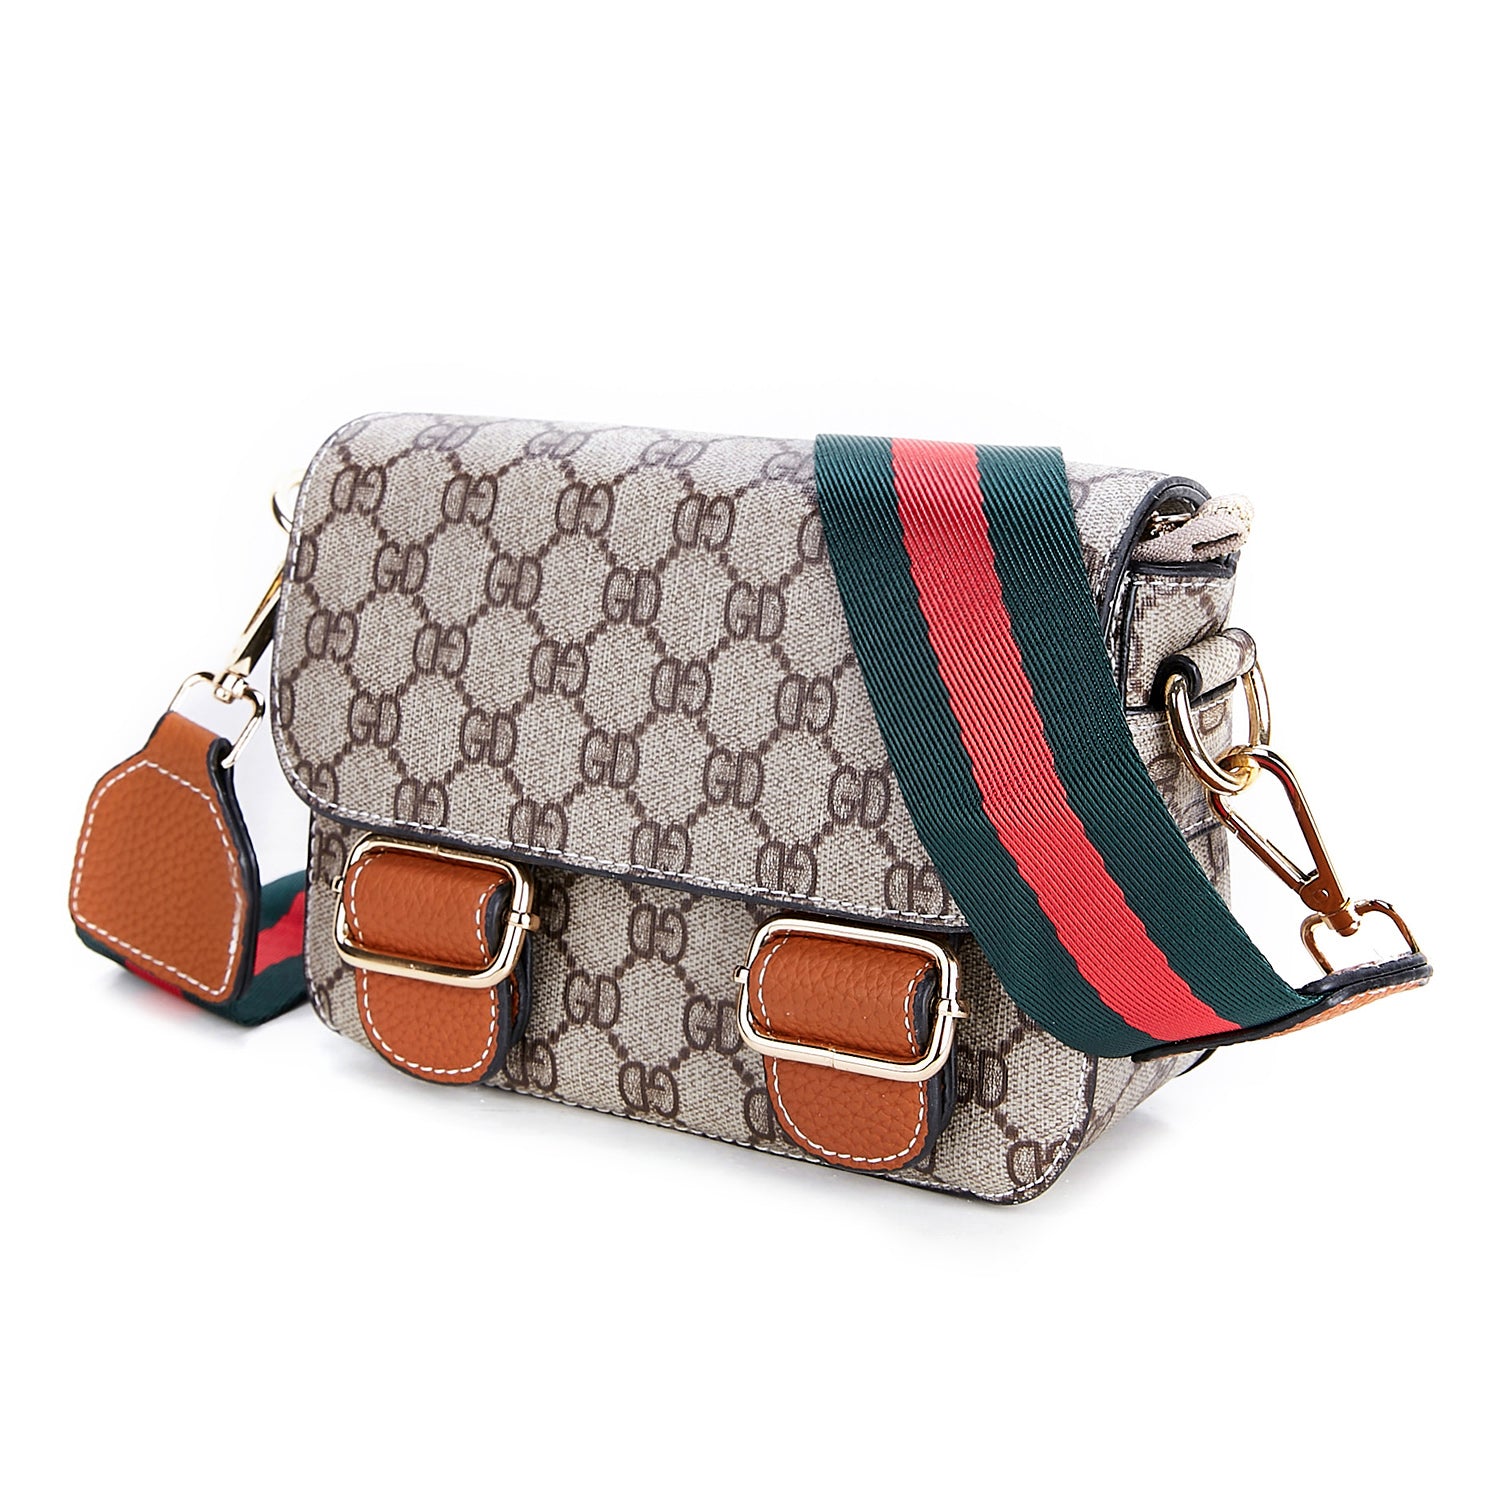 Handbag With Detachable Straps